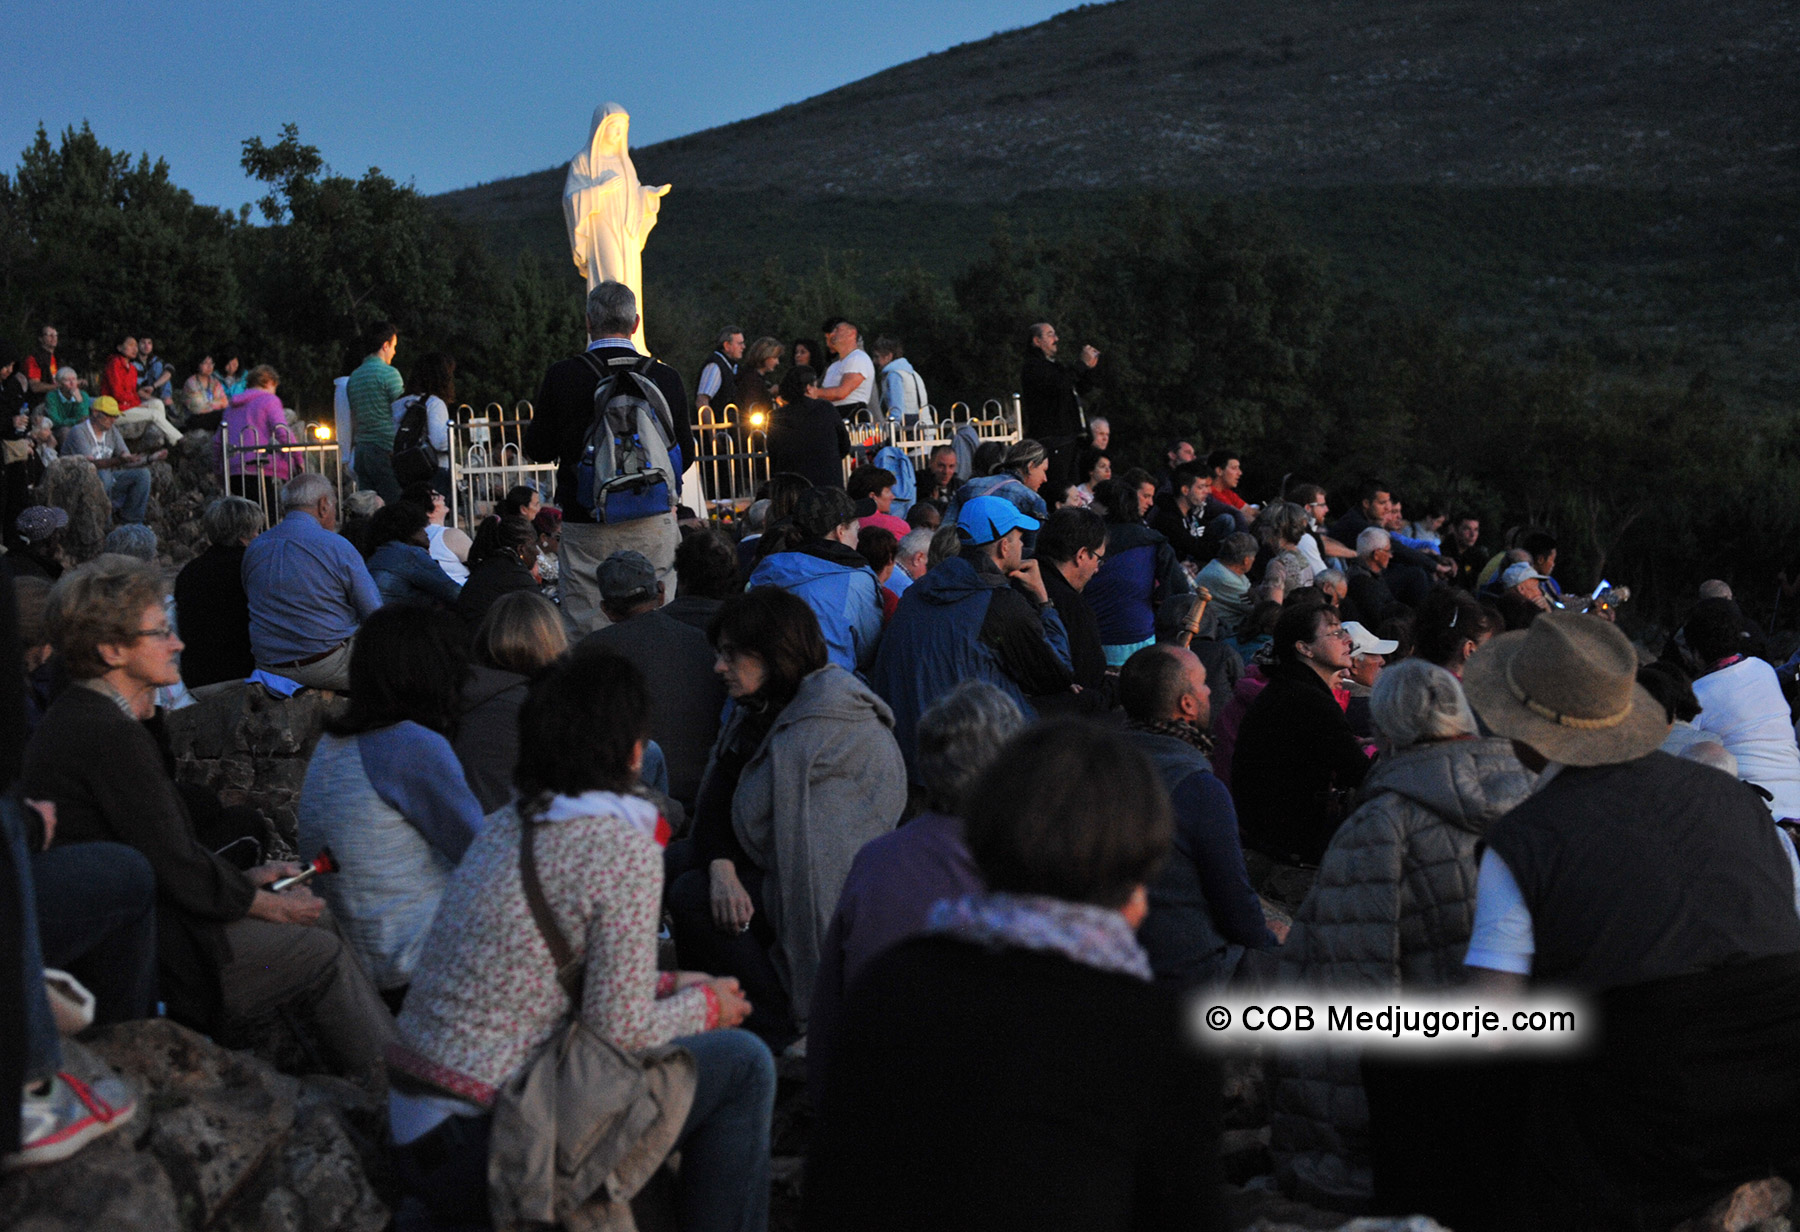 Ivan's Prayer Group in Medjugorje, May 29, 2015